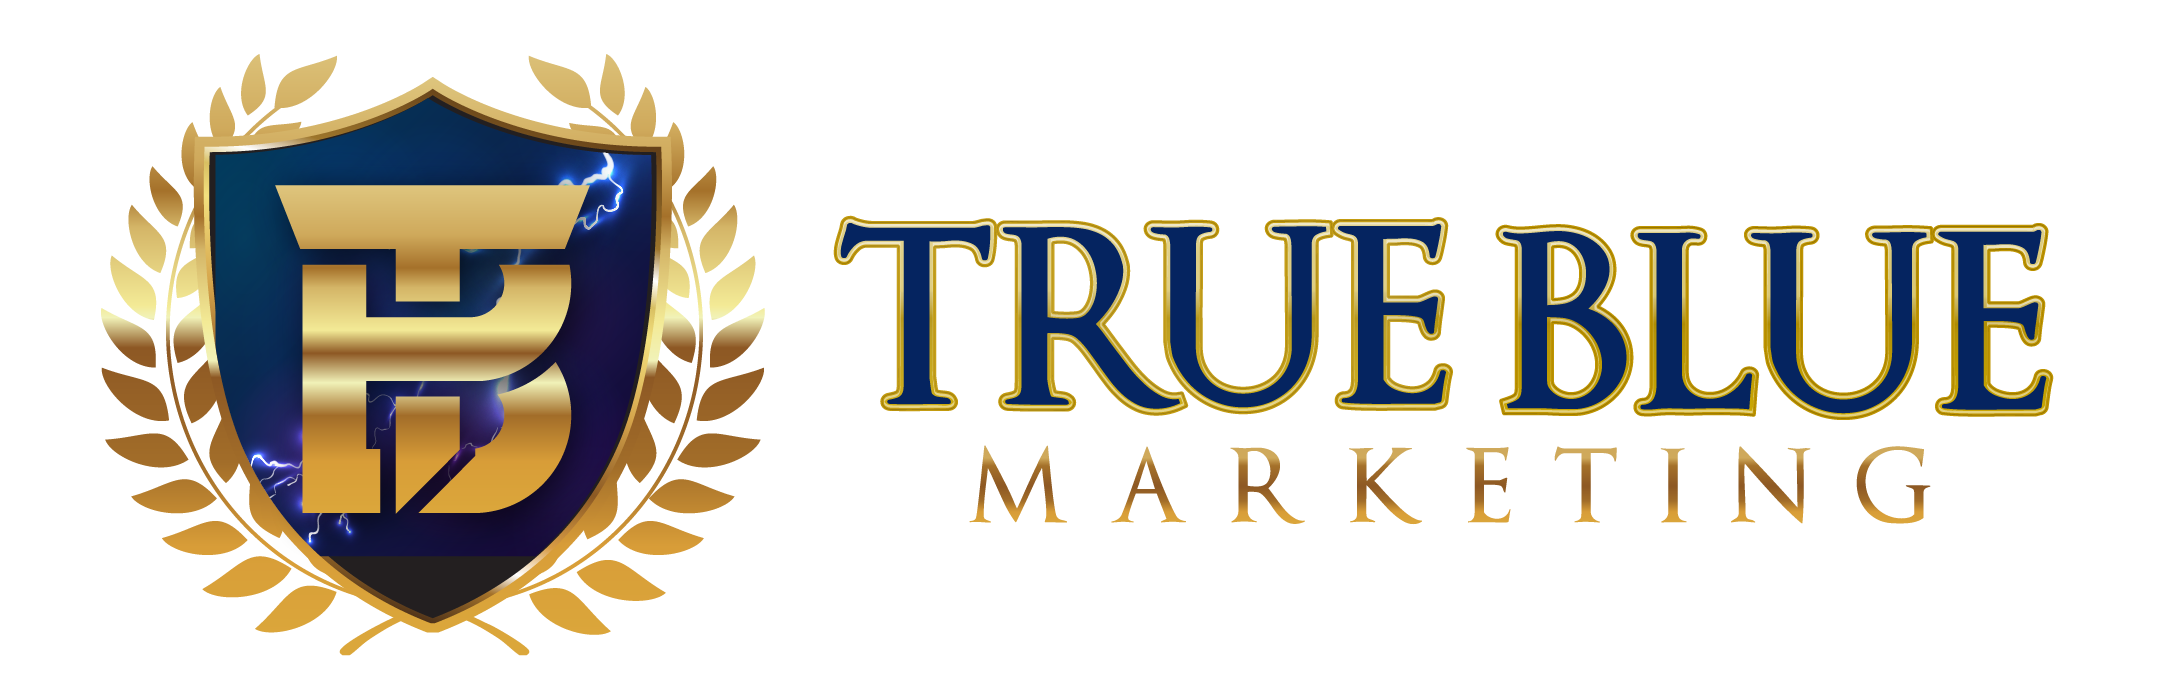 True Blue Marketing Inc.